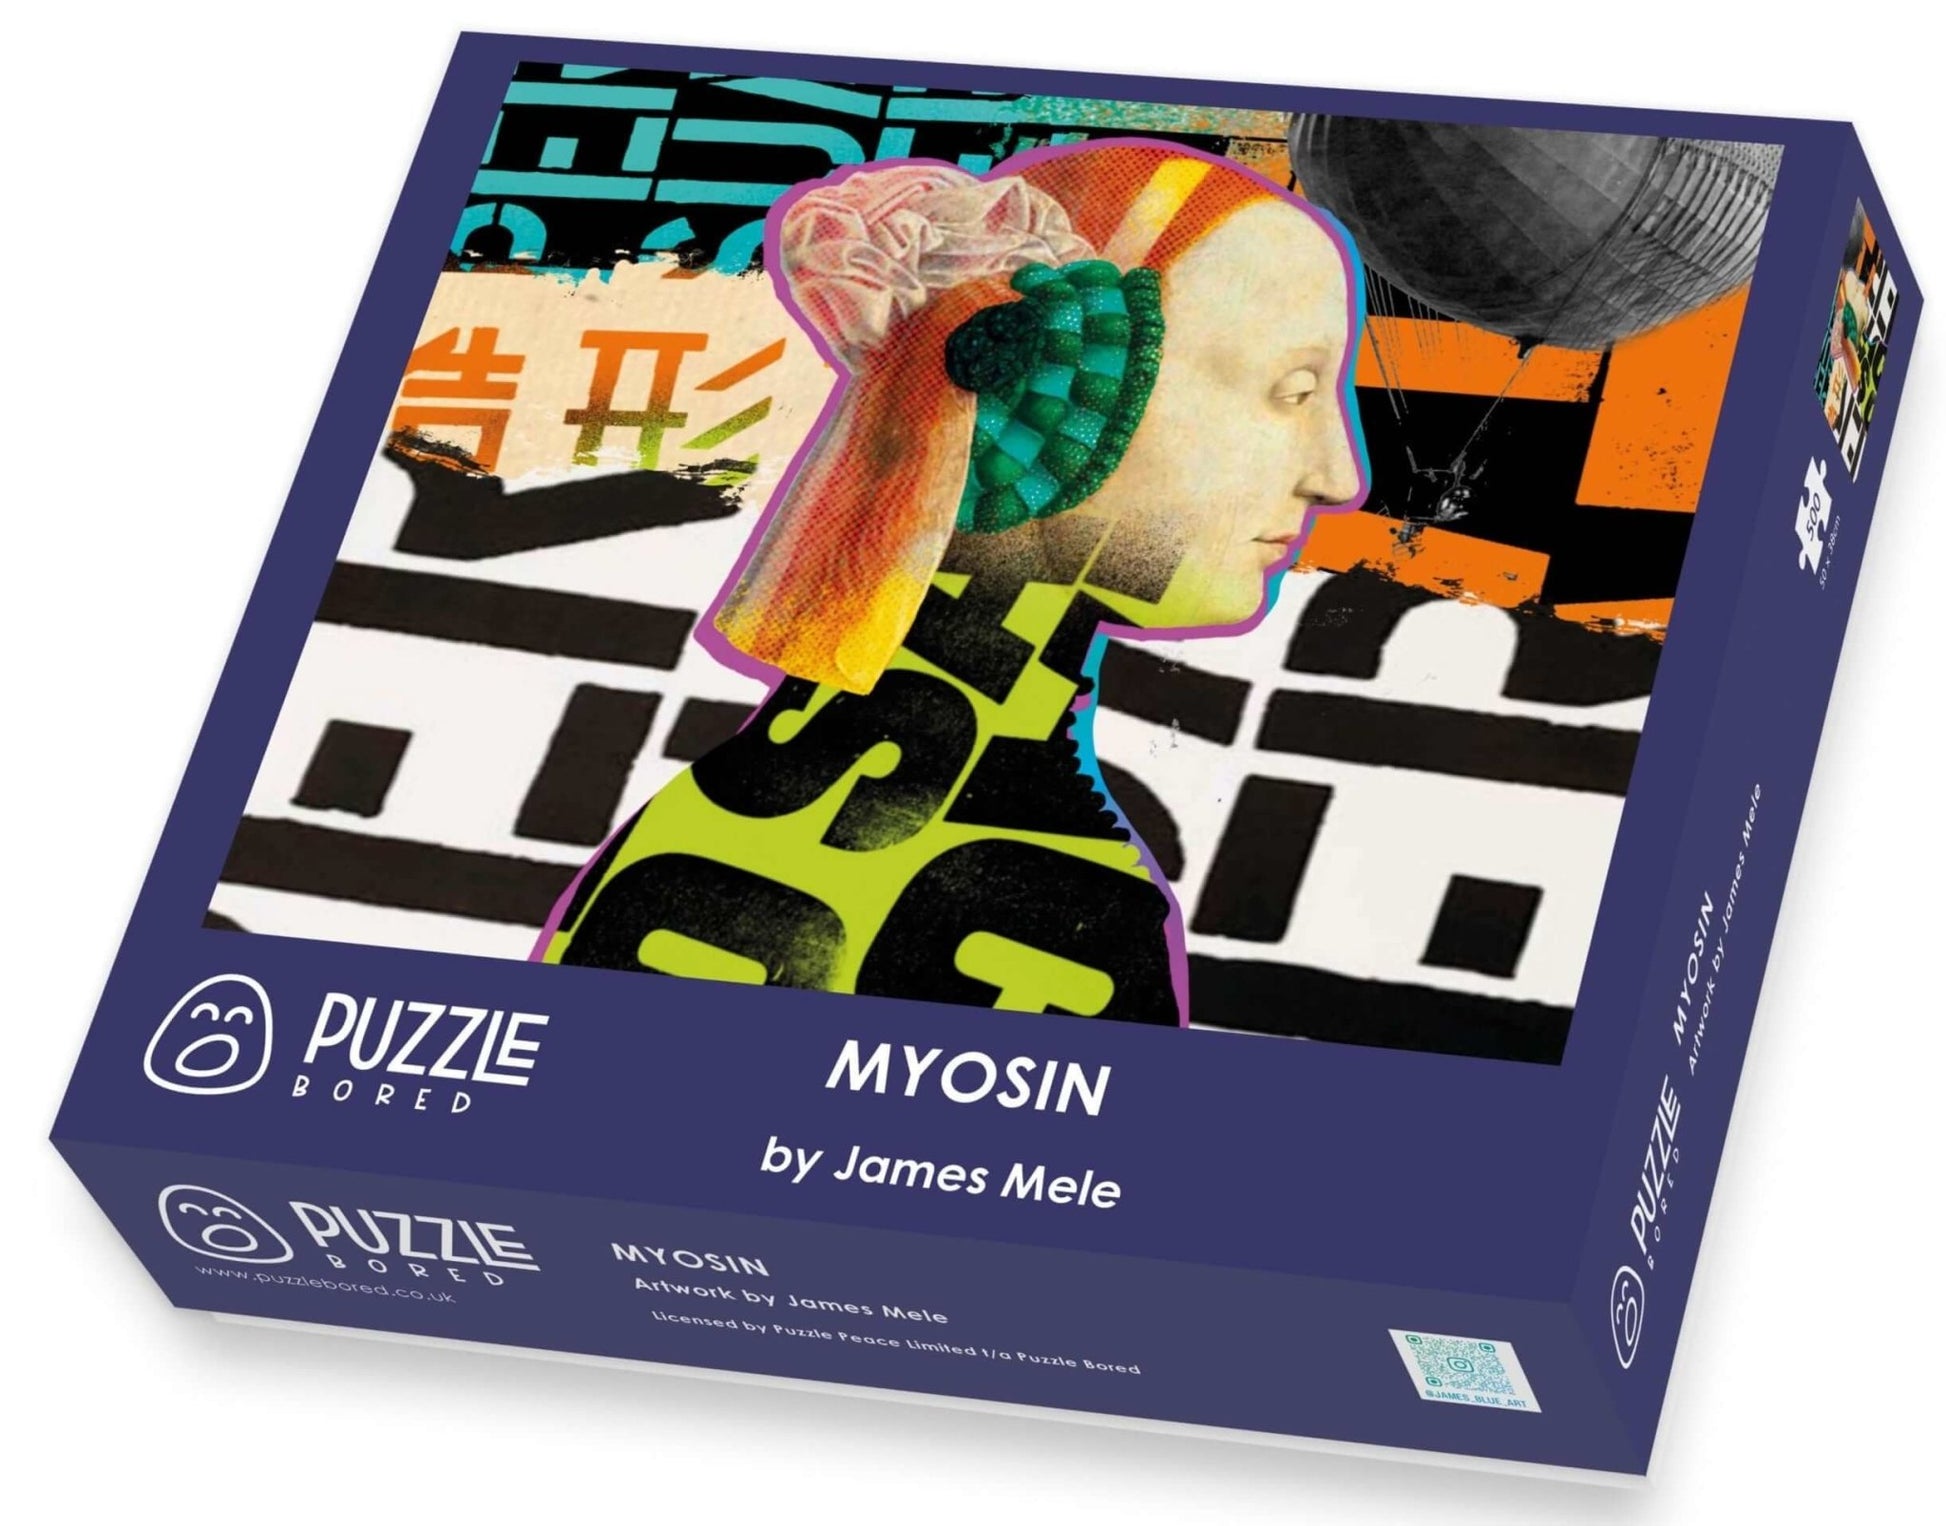 Myosin by James Mele - Puzzle Bored